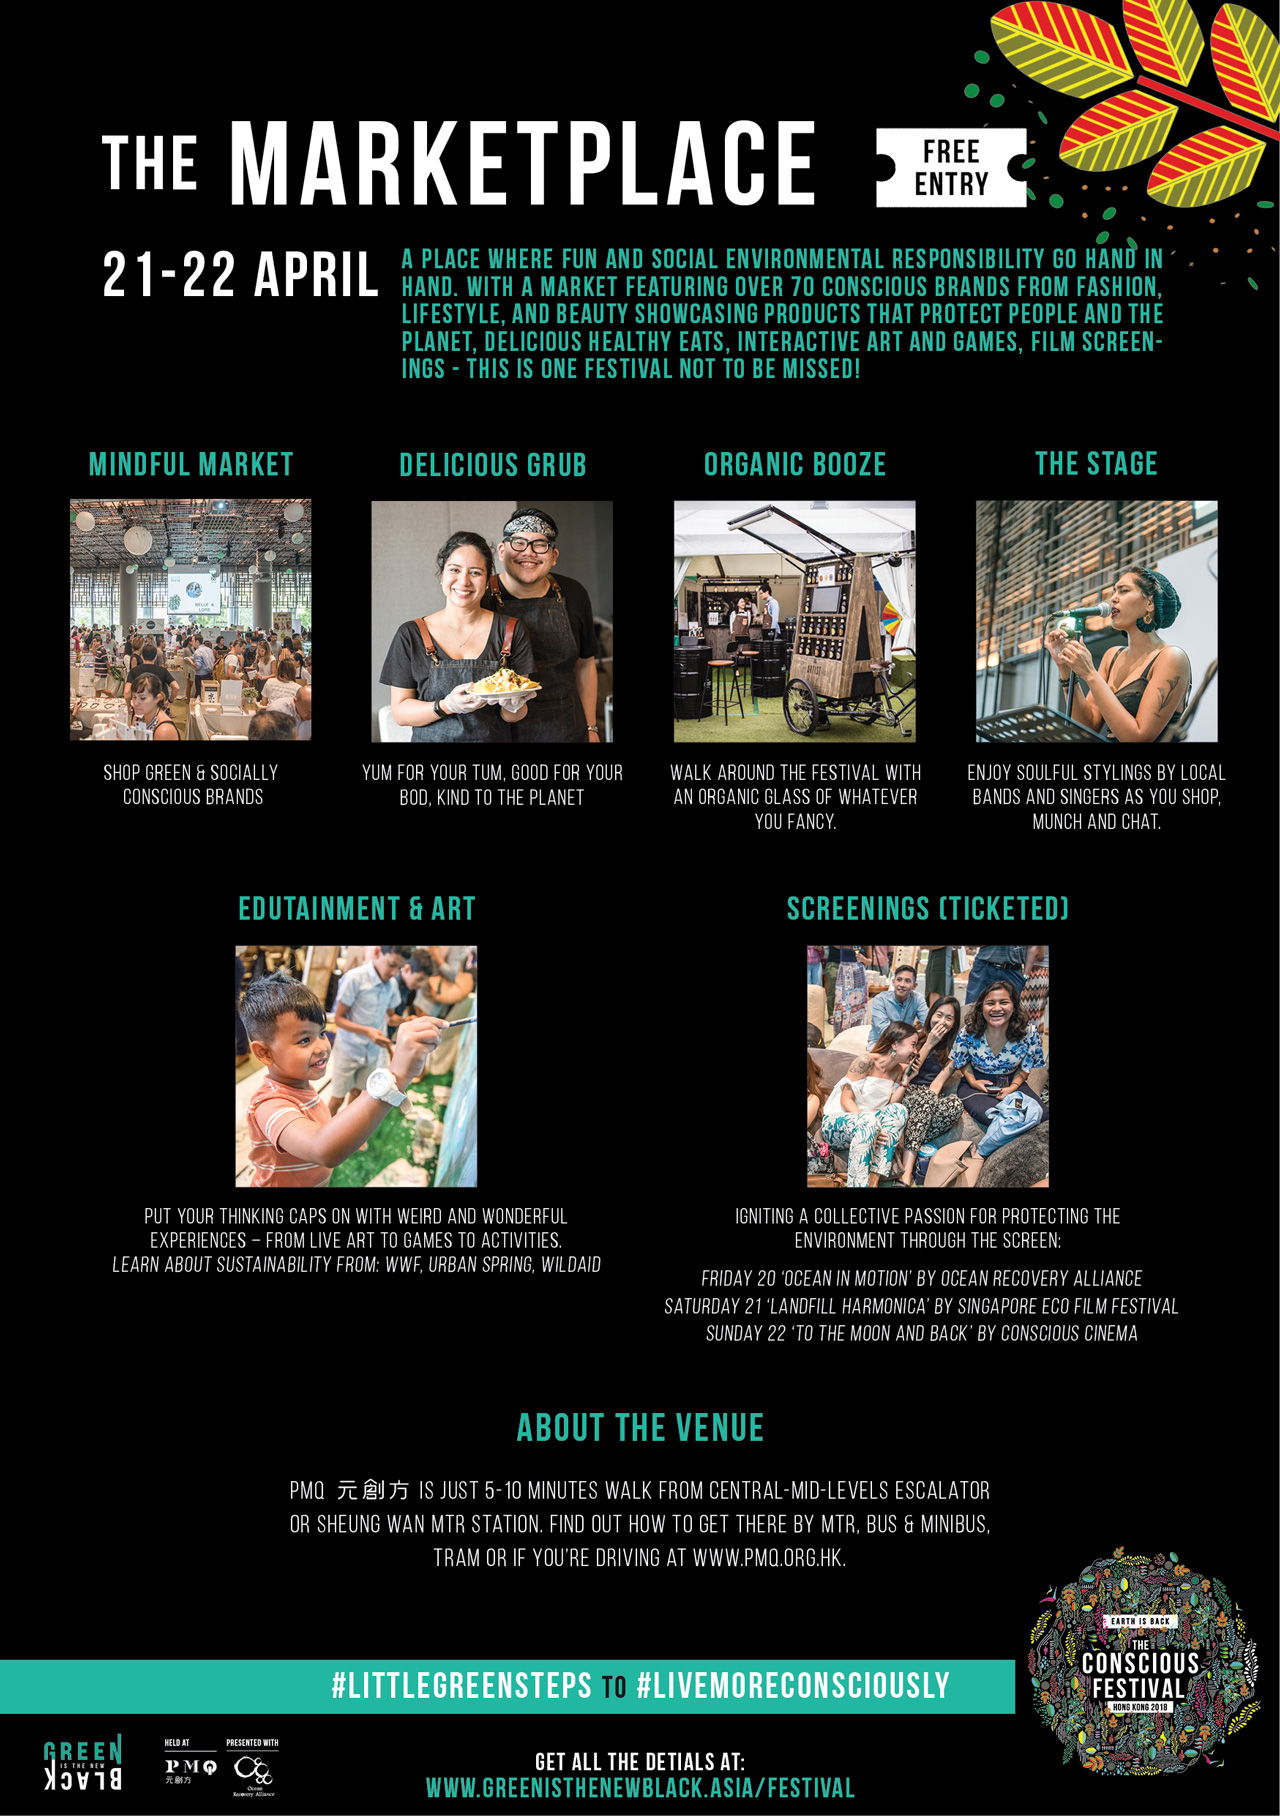 The Conscious Festival -- 20-22 April in HK